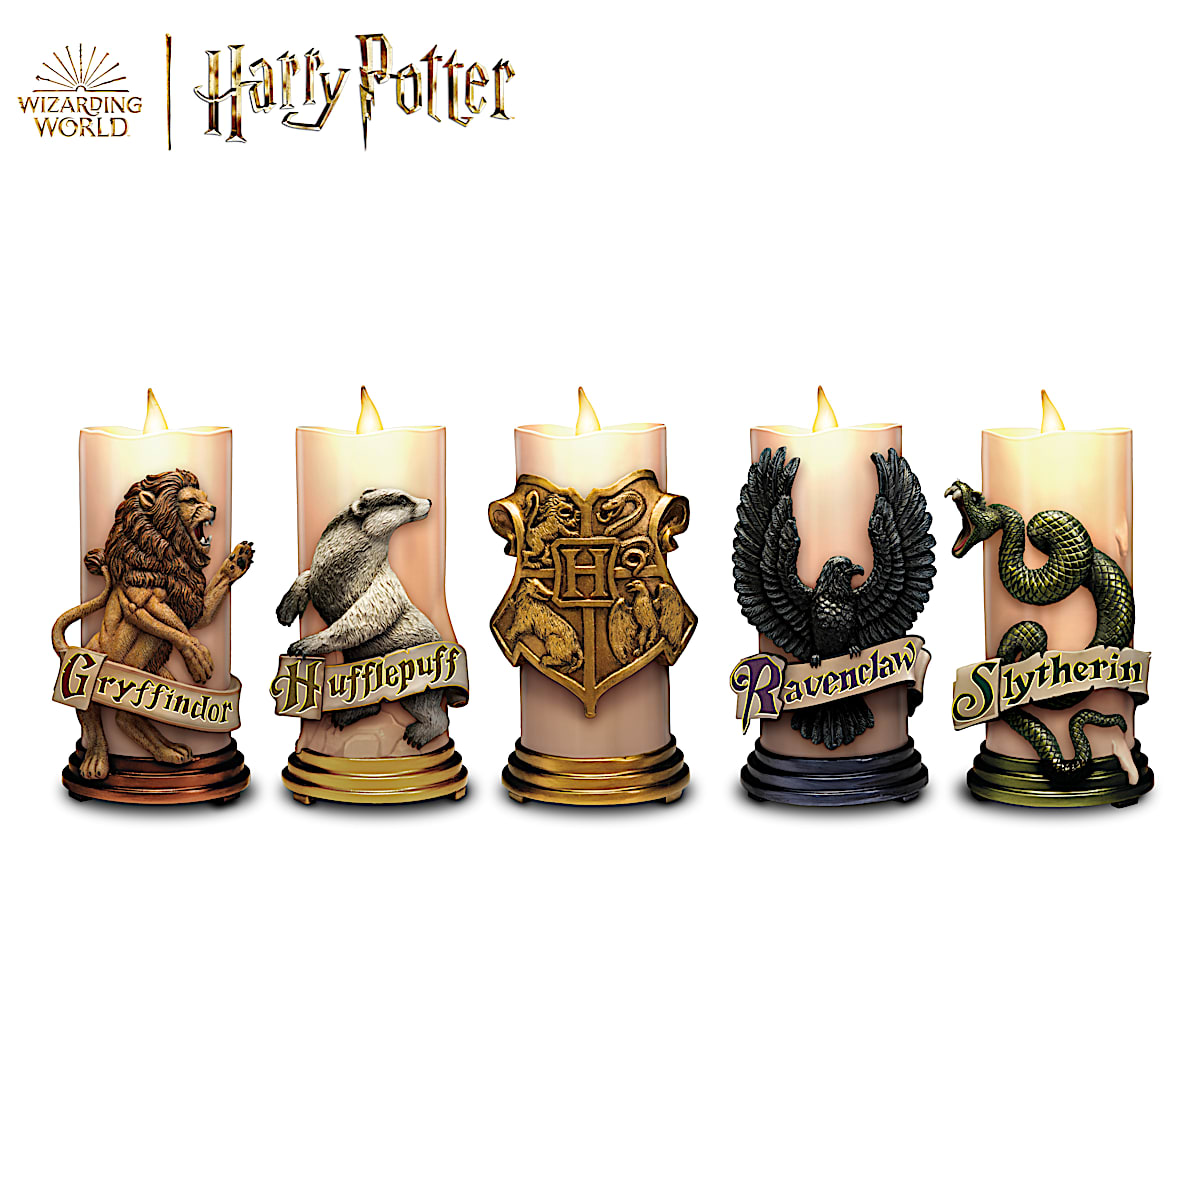 Hogwarts Houses stationery set, Harry Potter